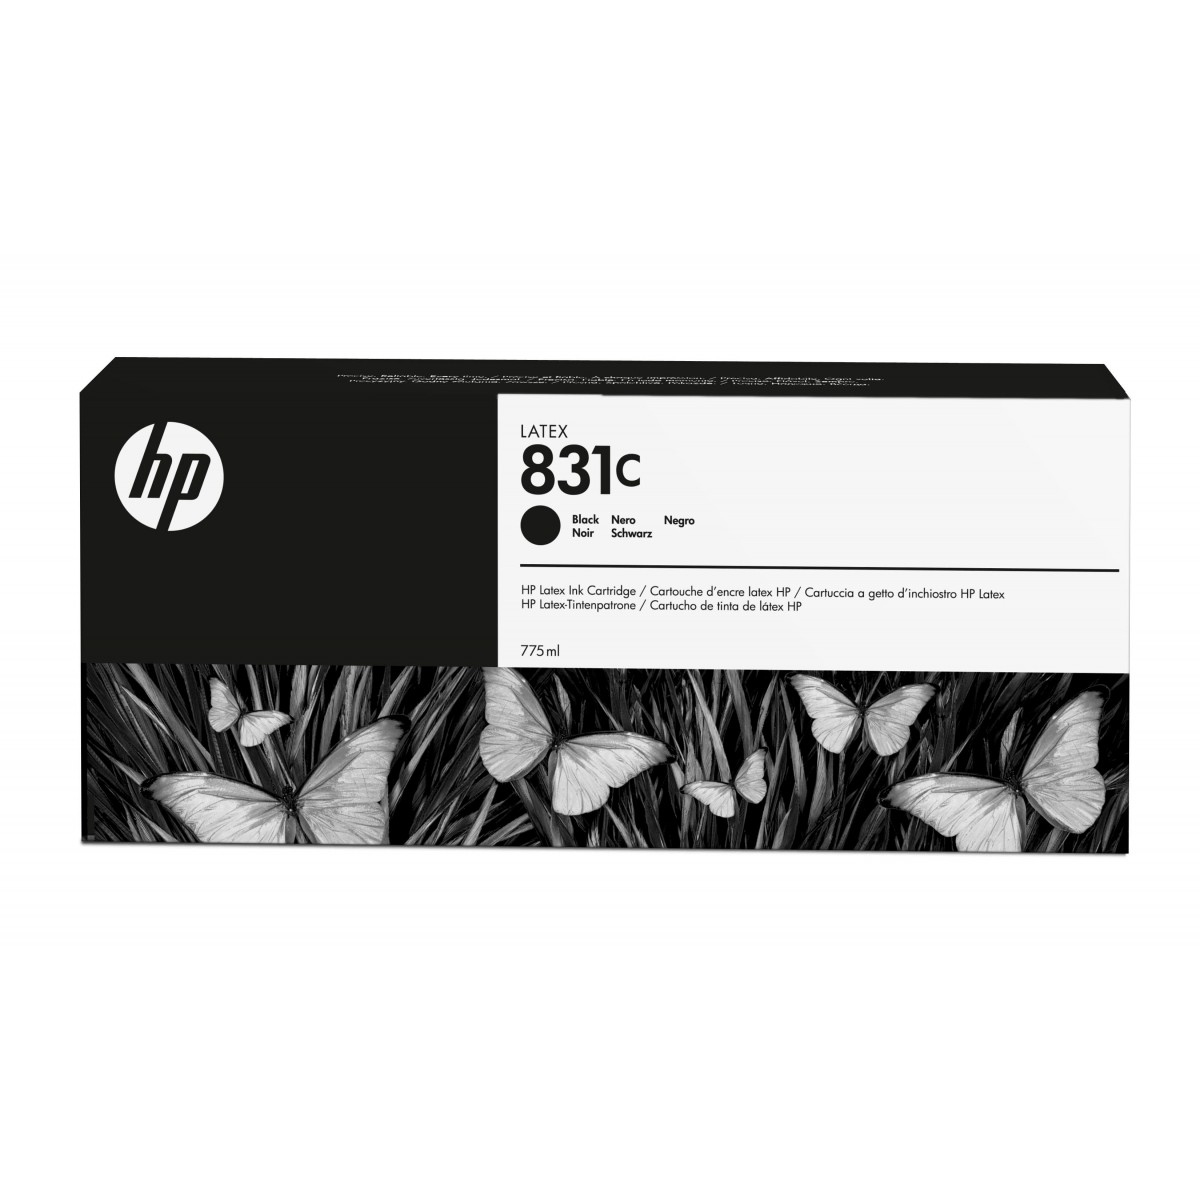 HP 831C - Original - Latex - Black - HP - HP Latex 310 - 330 - 360 - 560 - 570 - 315 - 335 - 1 pc(s)